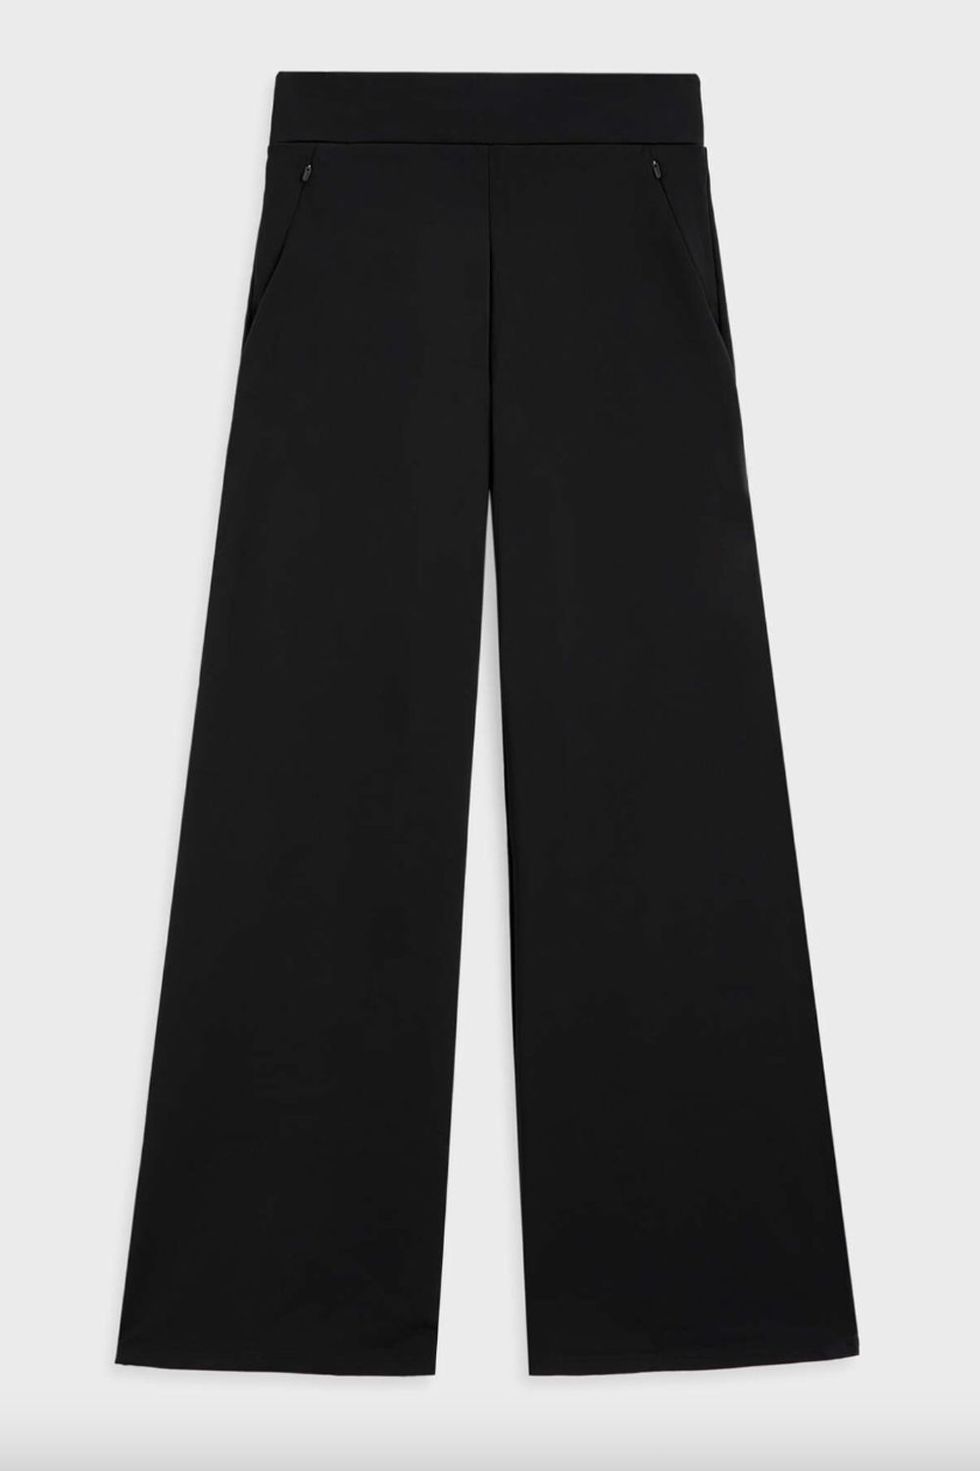 Pantalones anchos negros para mujer, pantalón de punto de cintura